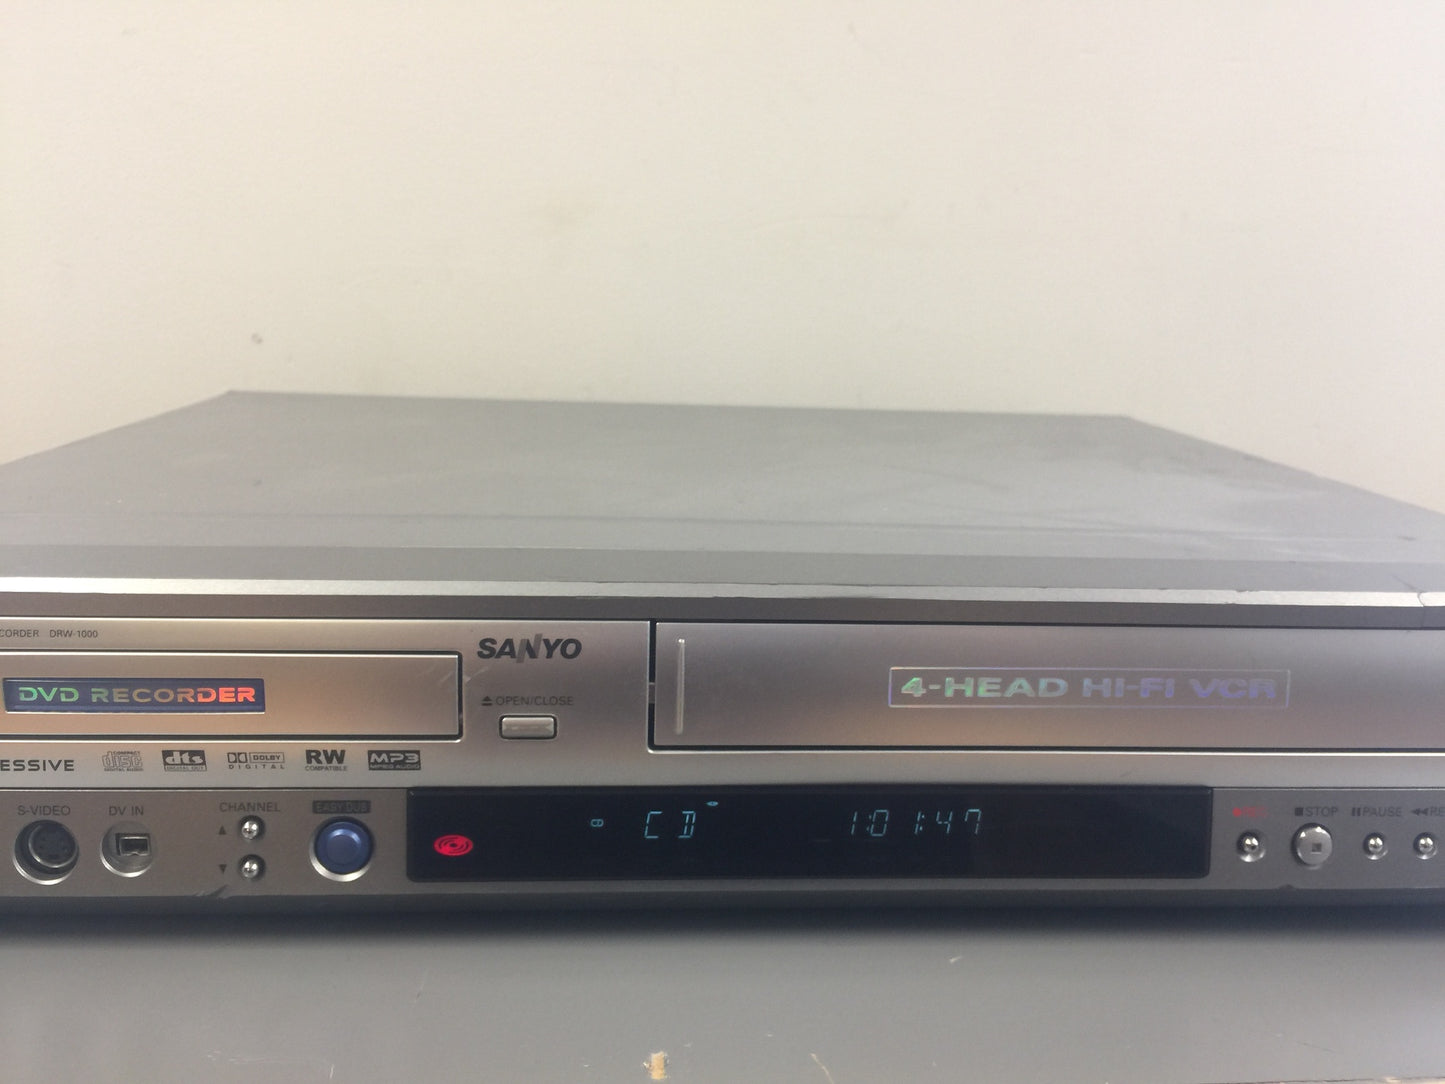 Sanyo DRW-1000 VHS & DVD Recorder